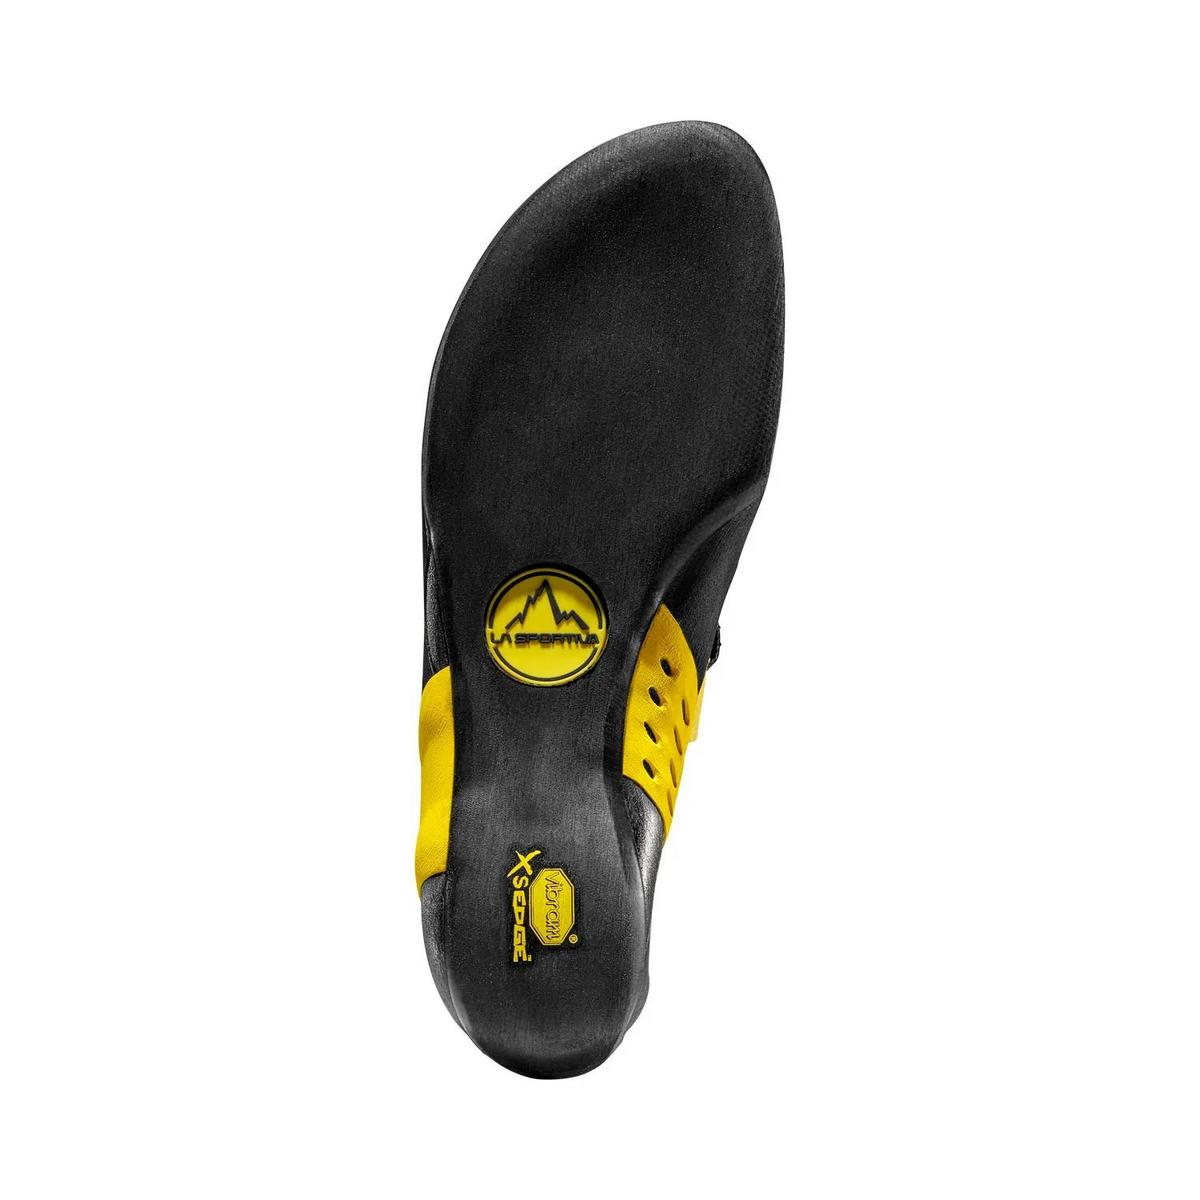 La Sportiva Men's Katana Climbing Shoes - Yellow